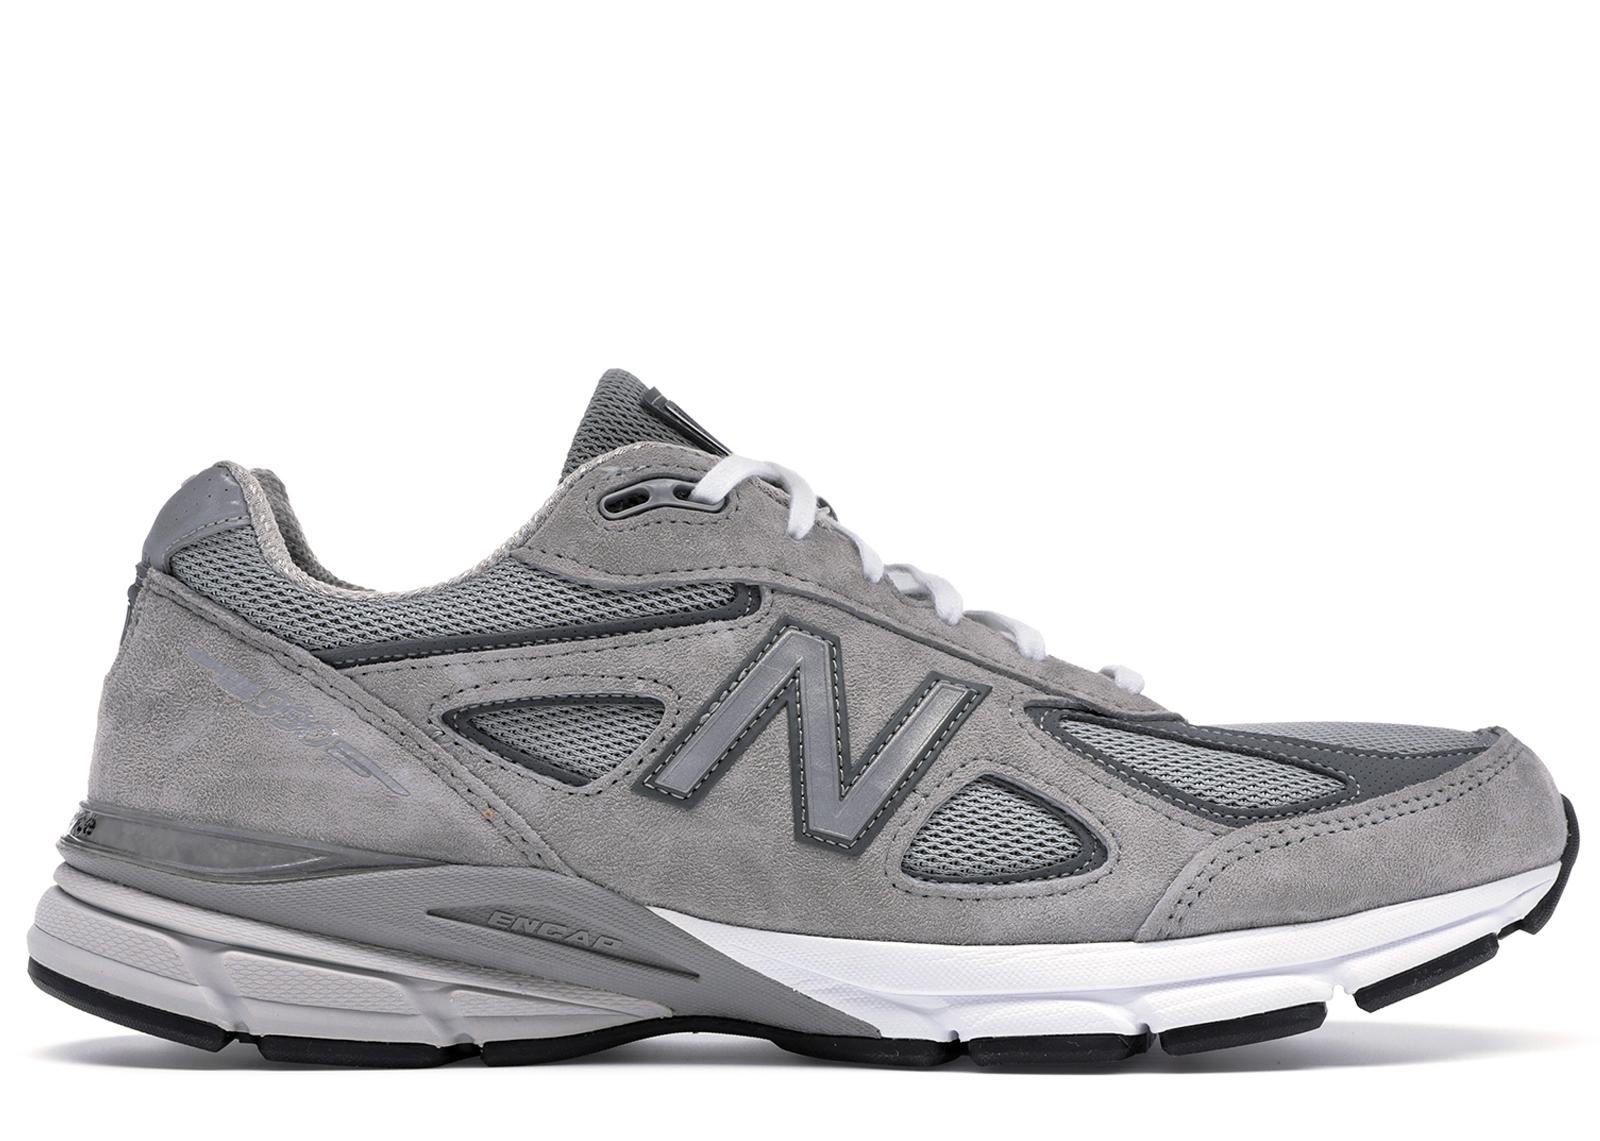 New Balance 990v4 Grey in Grey/White (Gray) for Men - Lyst